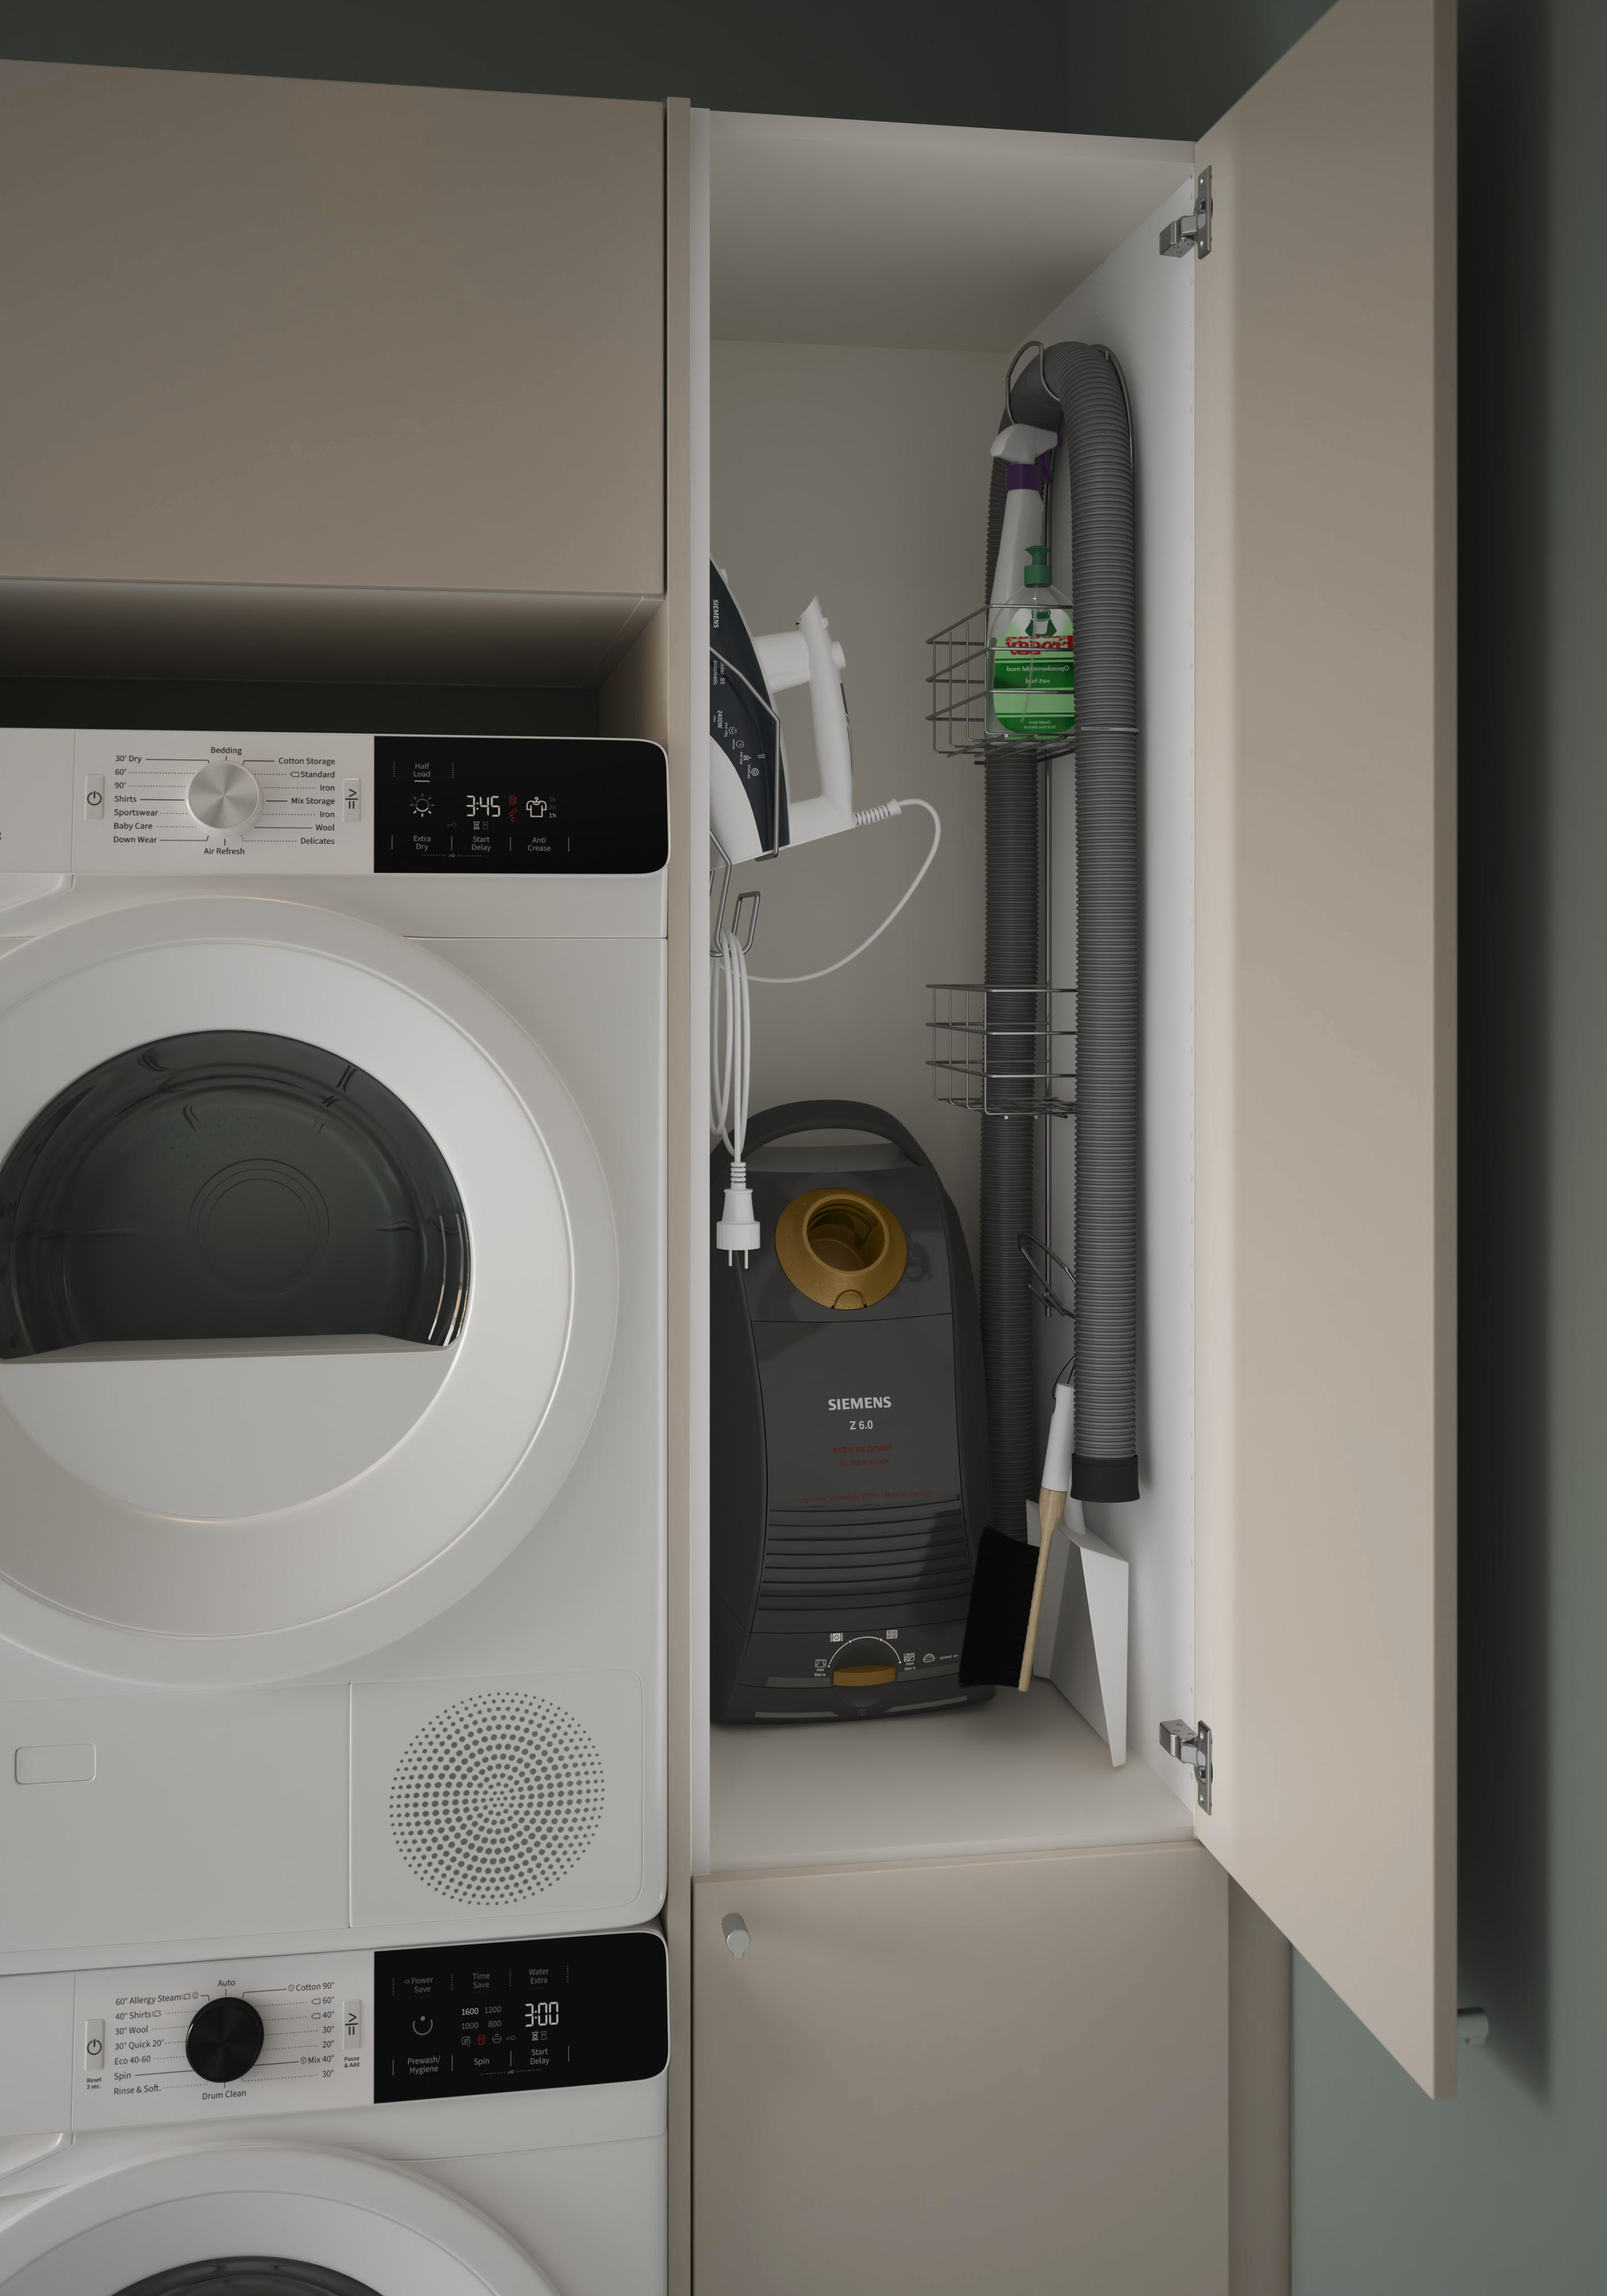 EPOQ - Laundry Room - L4 - Core Grey Mist - Beige - washer dryer column - laundry storage - vacum - iron_edited